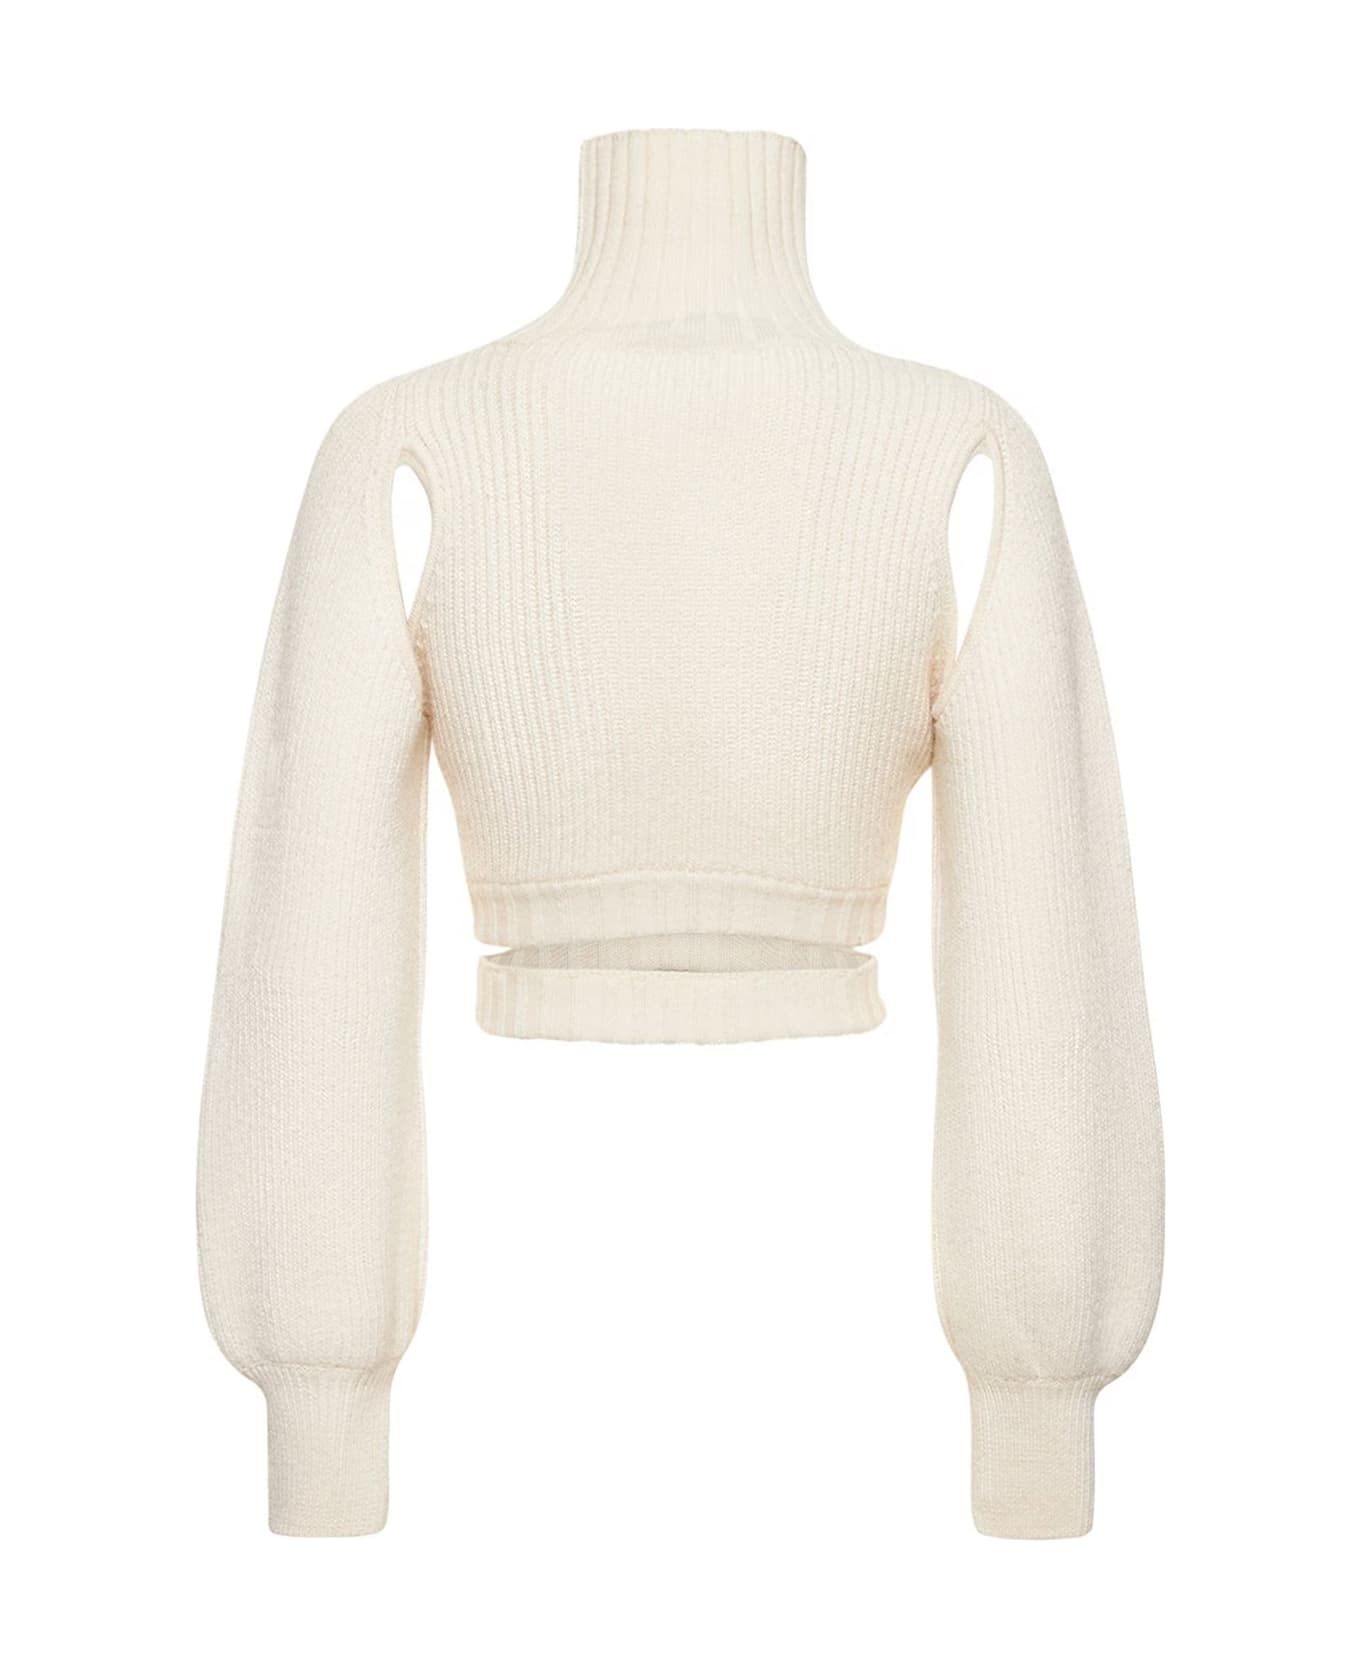 ANDREĀDAMO Sweater - White